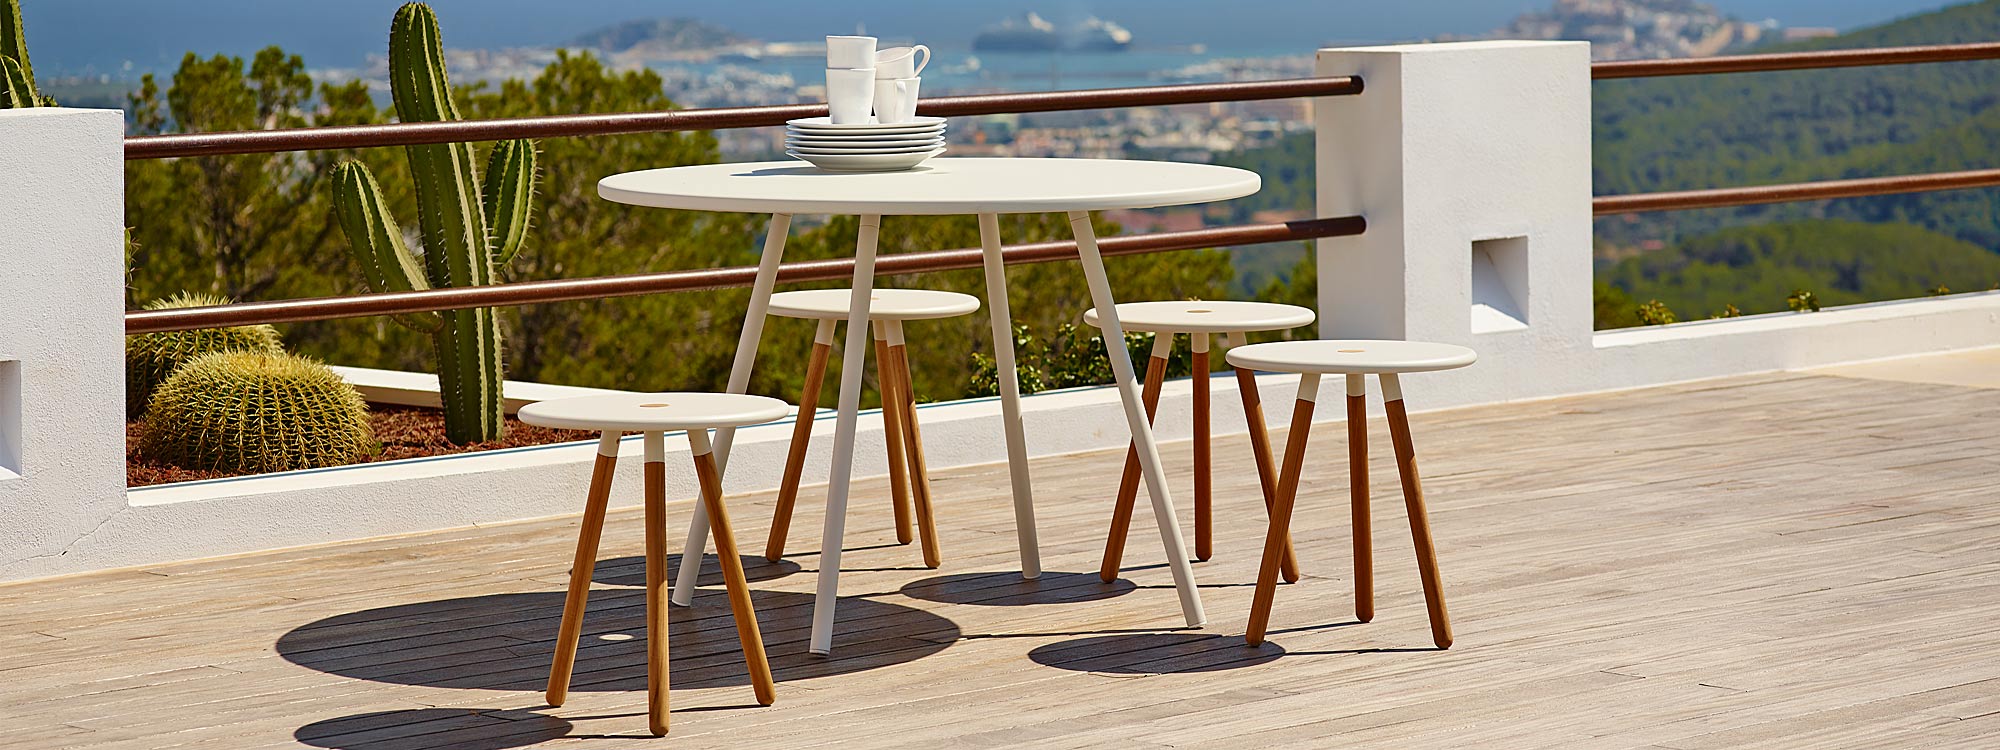 Area circular garden dining set includes a round outdoor table & garden stools - High quality garden furniture by Caneline exterior furniture